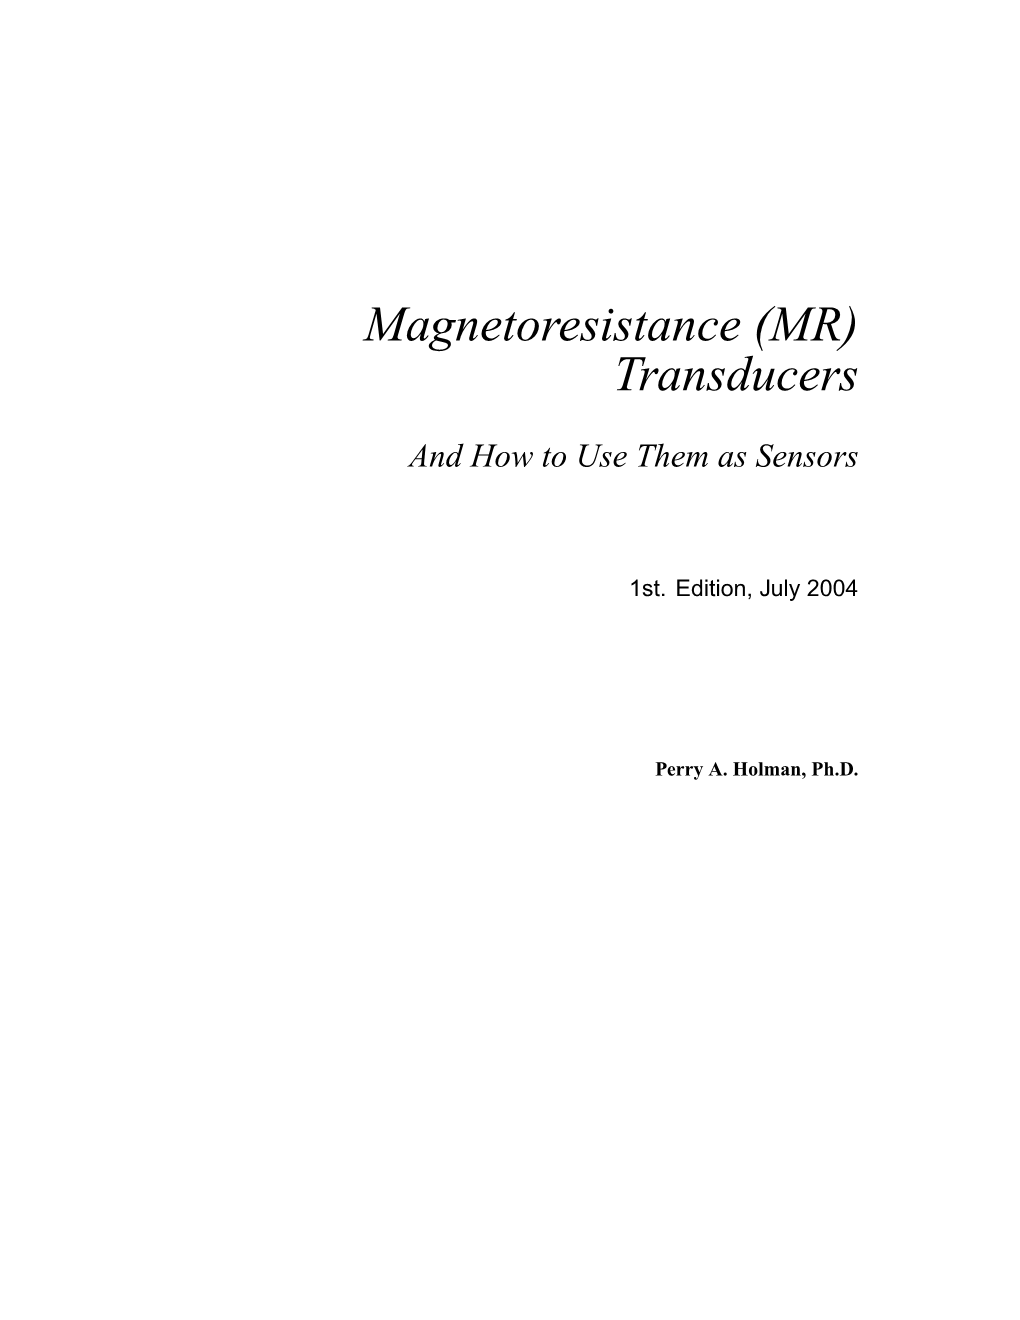 Magnetoresistance (MR) Transducers